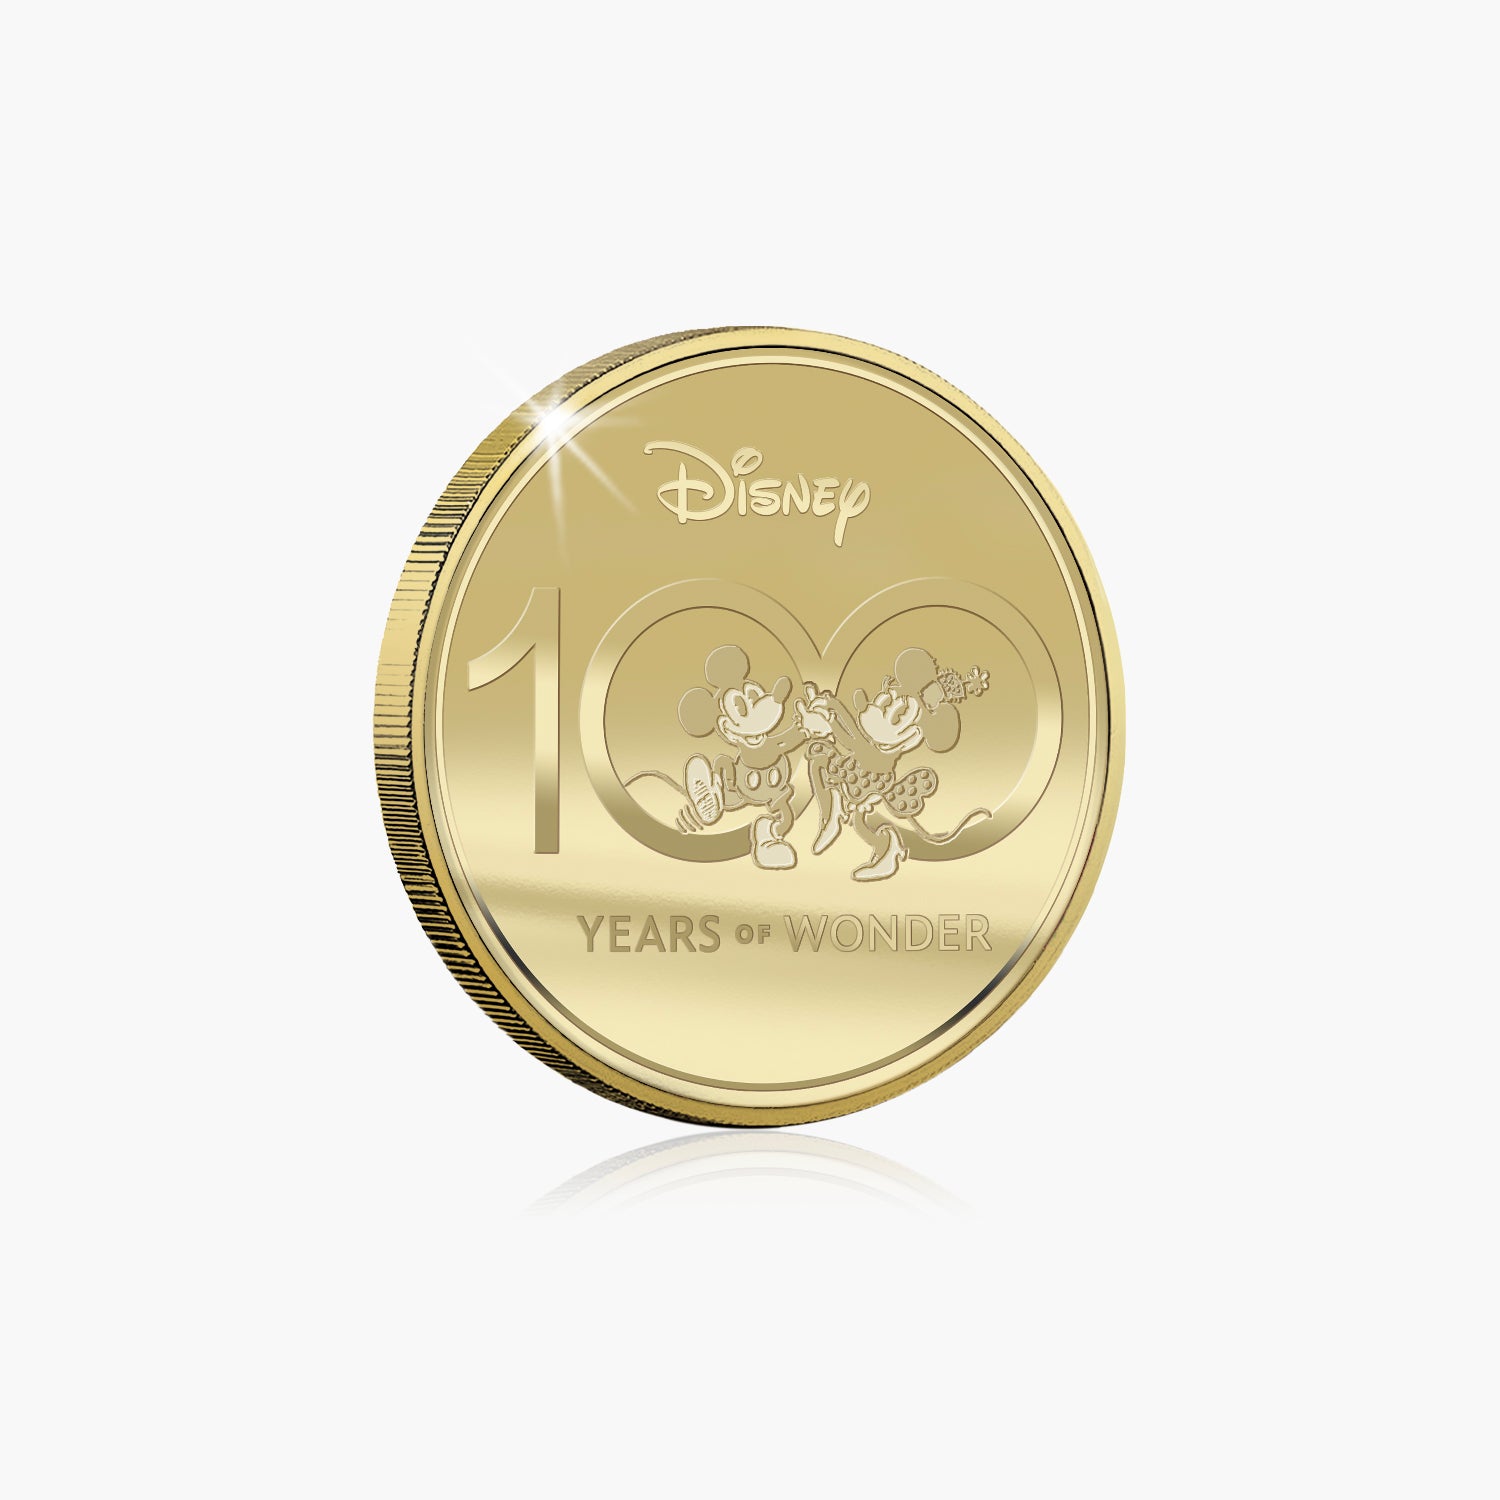 D100 Disney Snow White Gold Plated Commemorative